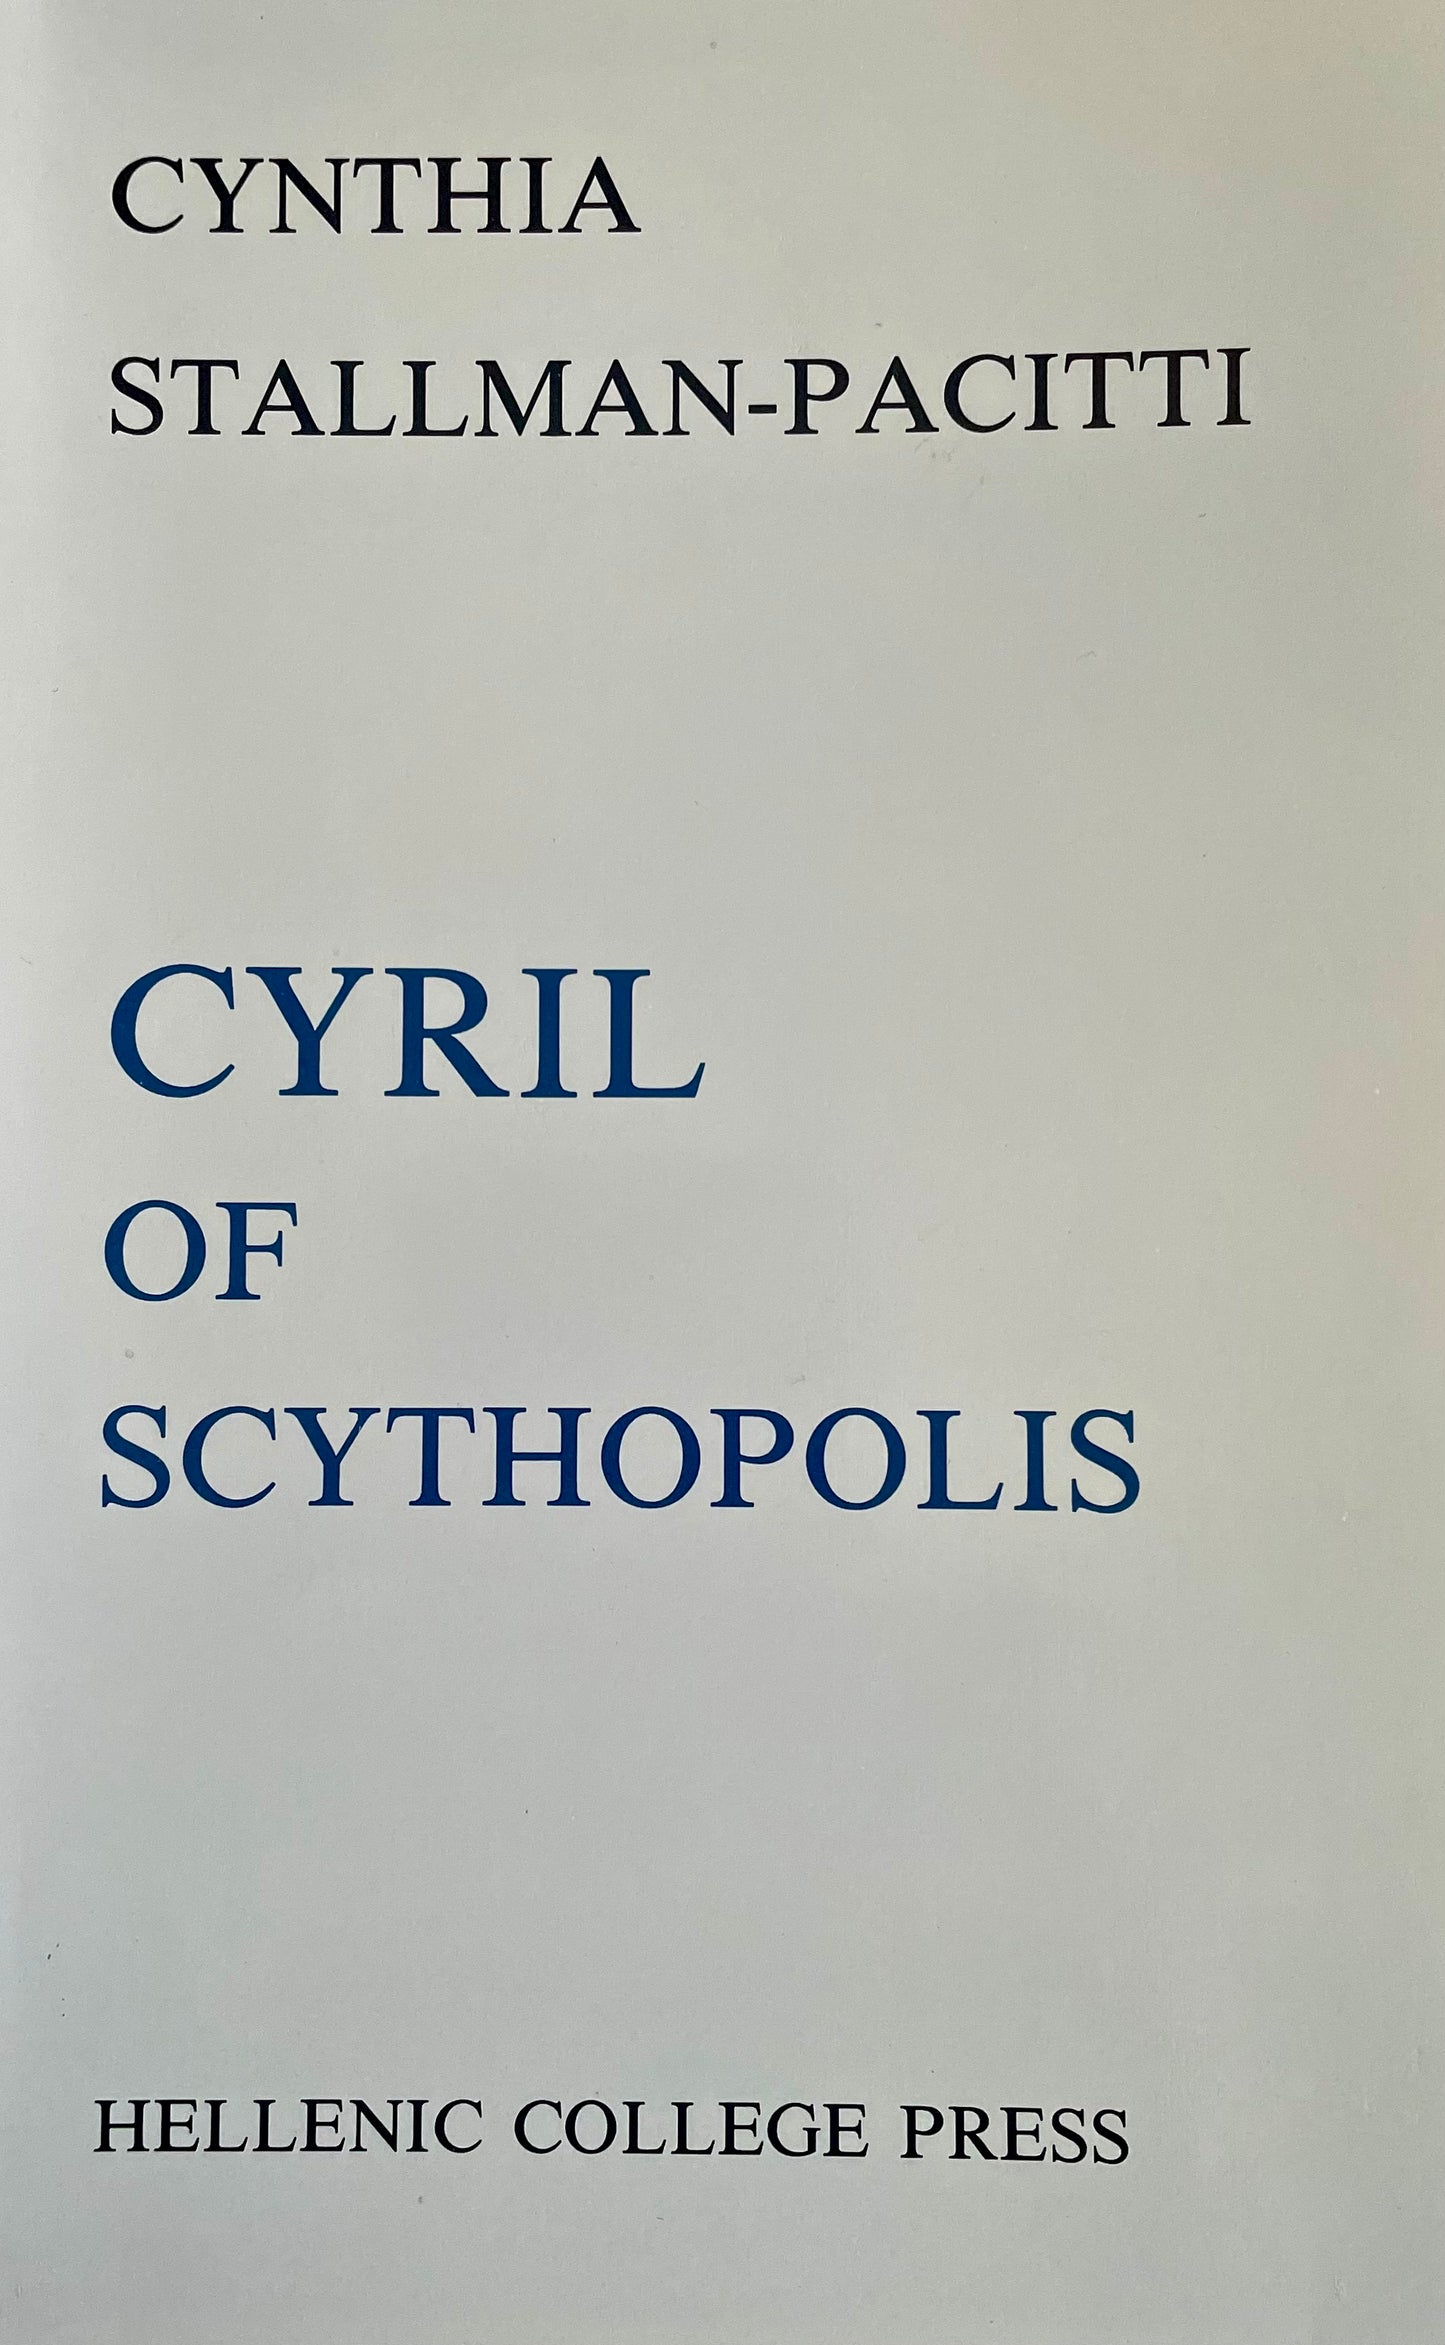 Cyril of Scythopolis: A Study in Hagiography as Apology